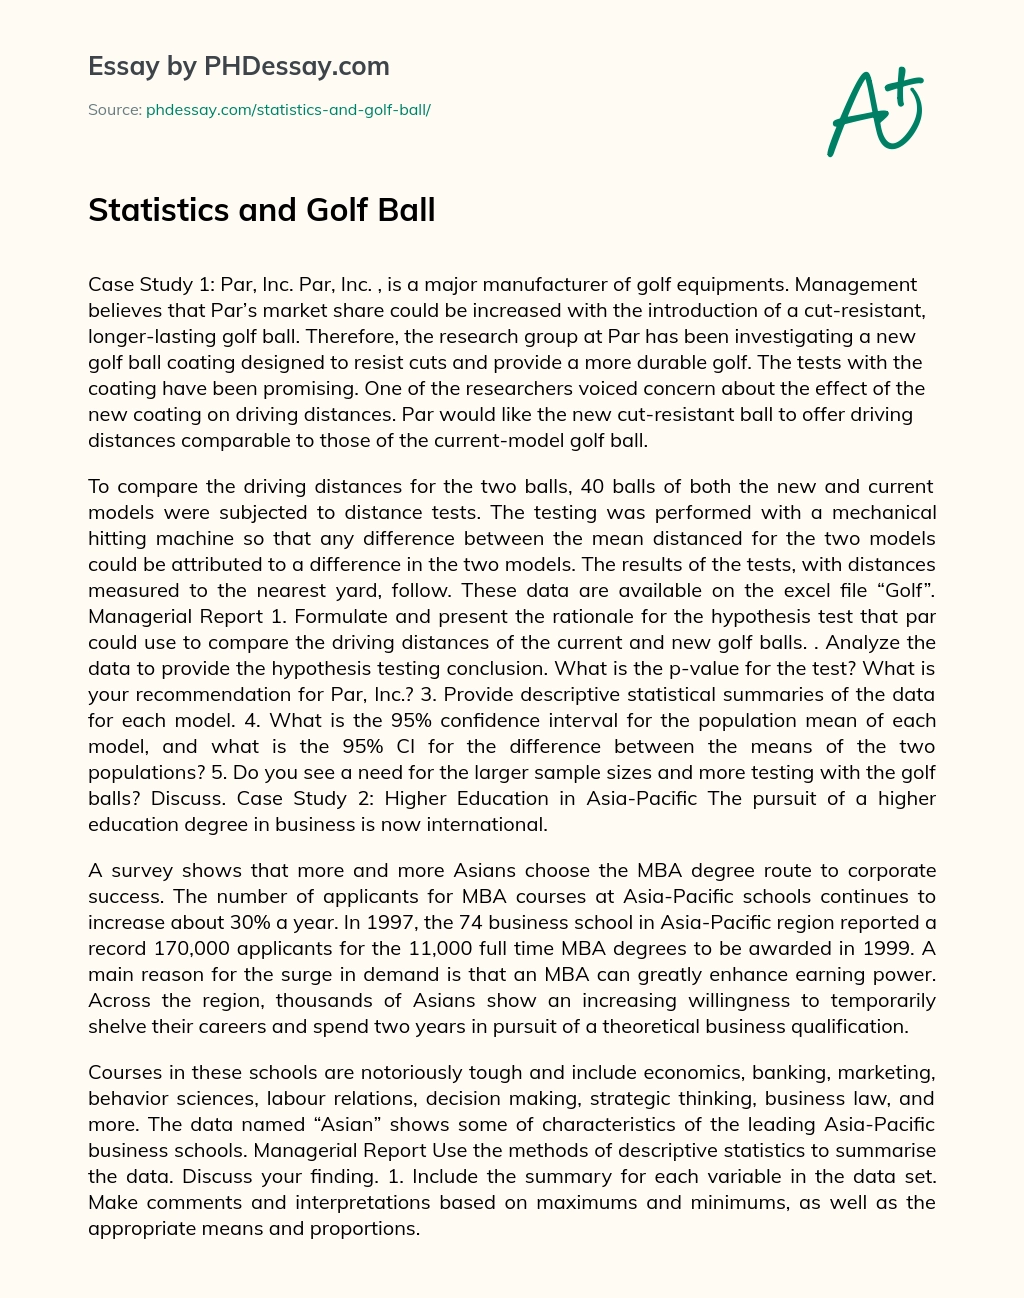 Statistics and Golf Ball essay